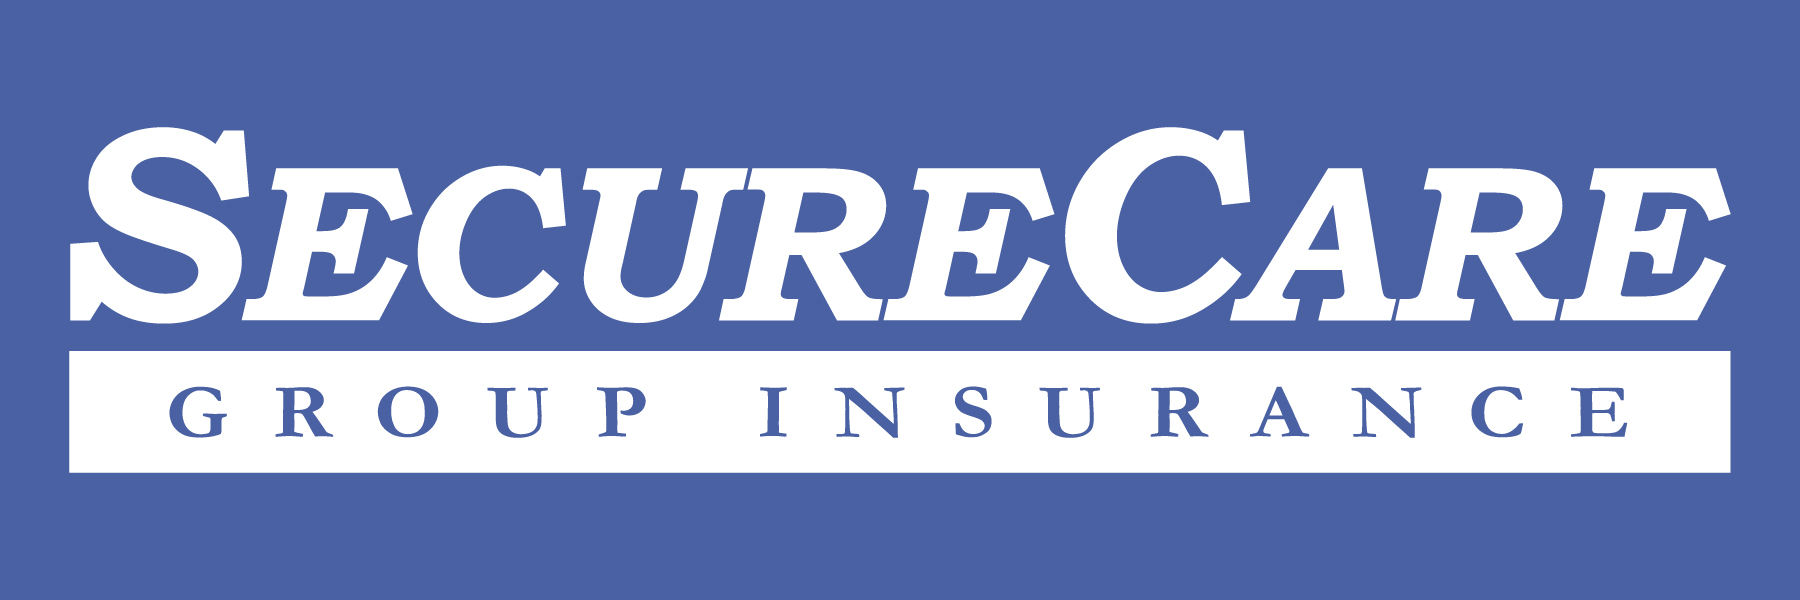 SecureCare Logo Icon Header Image